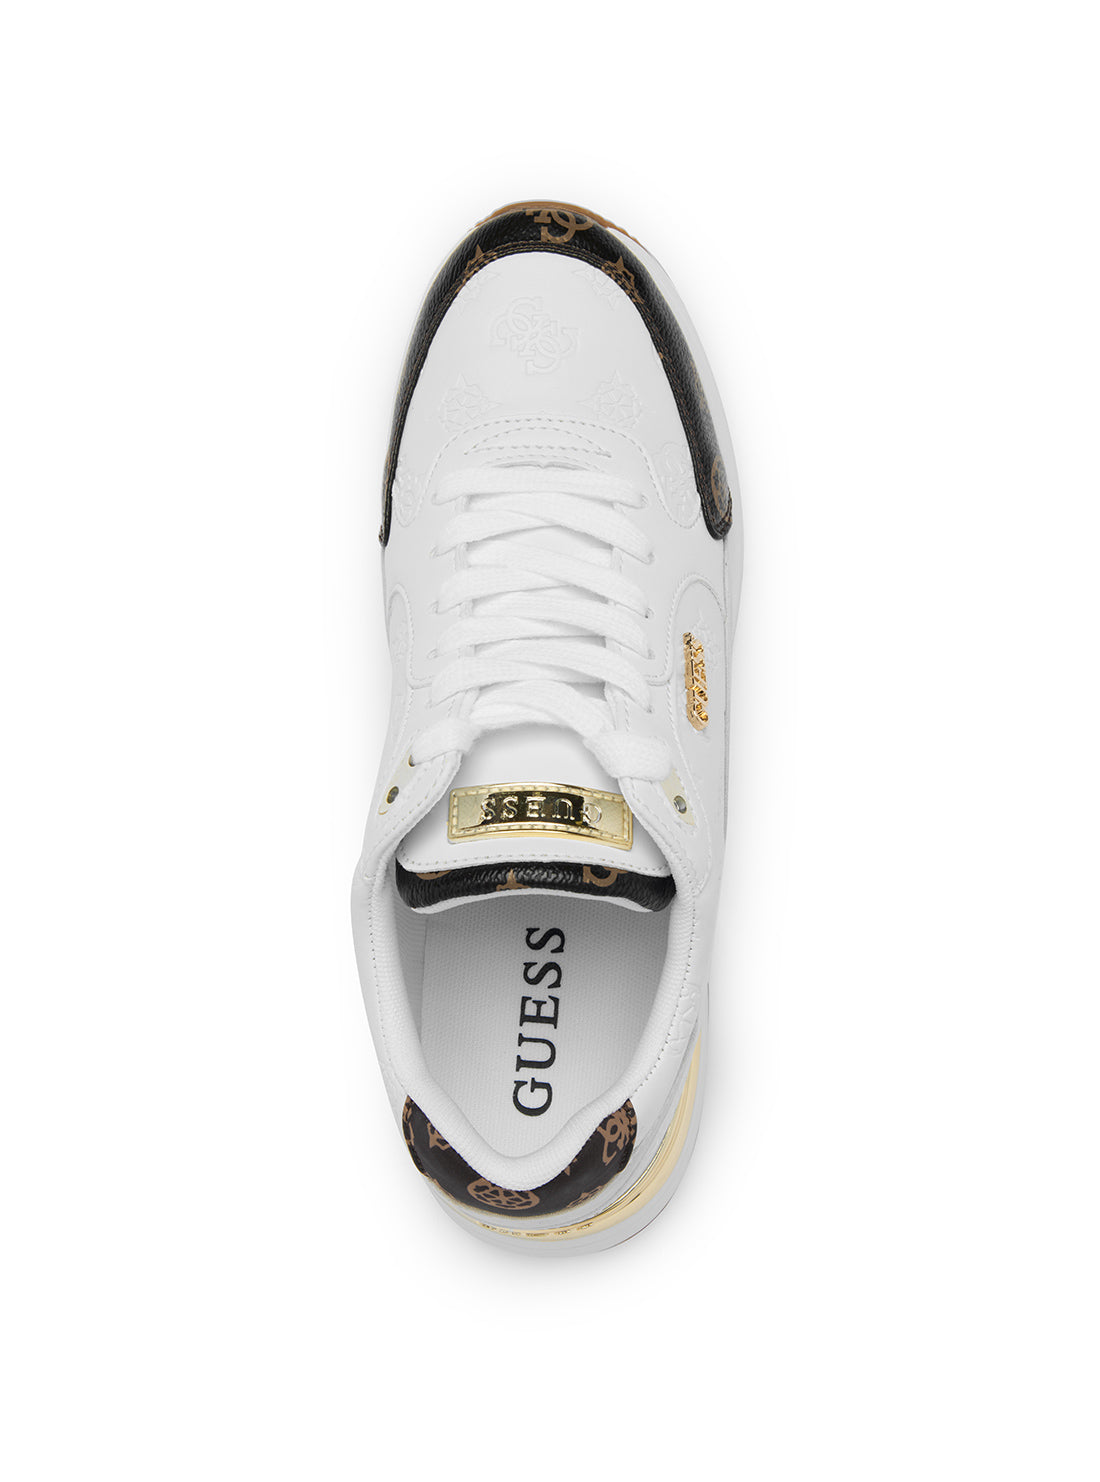 White Logo Moxea Sneakers | GUESS Women's Shoes | top view